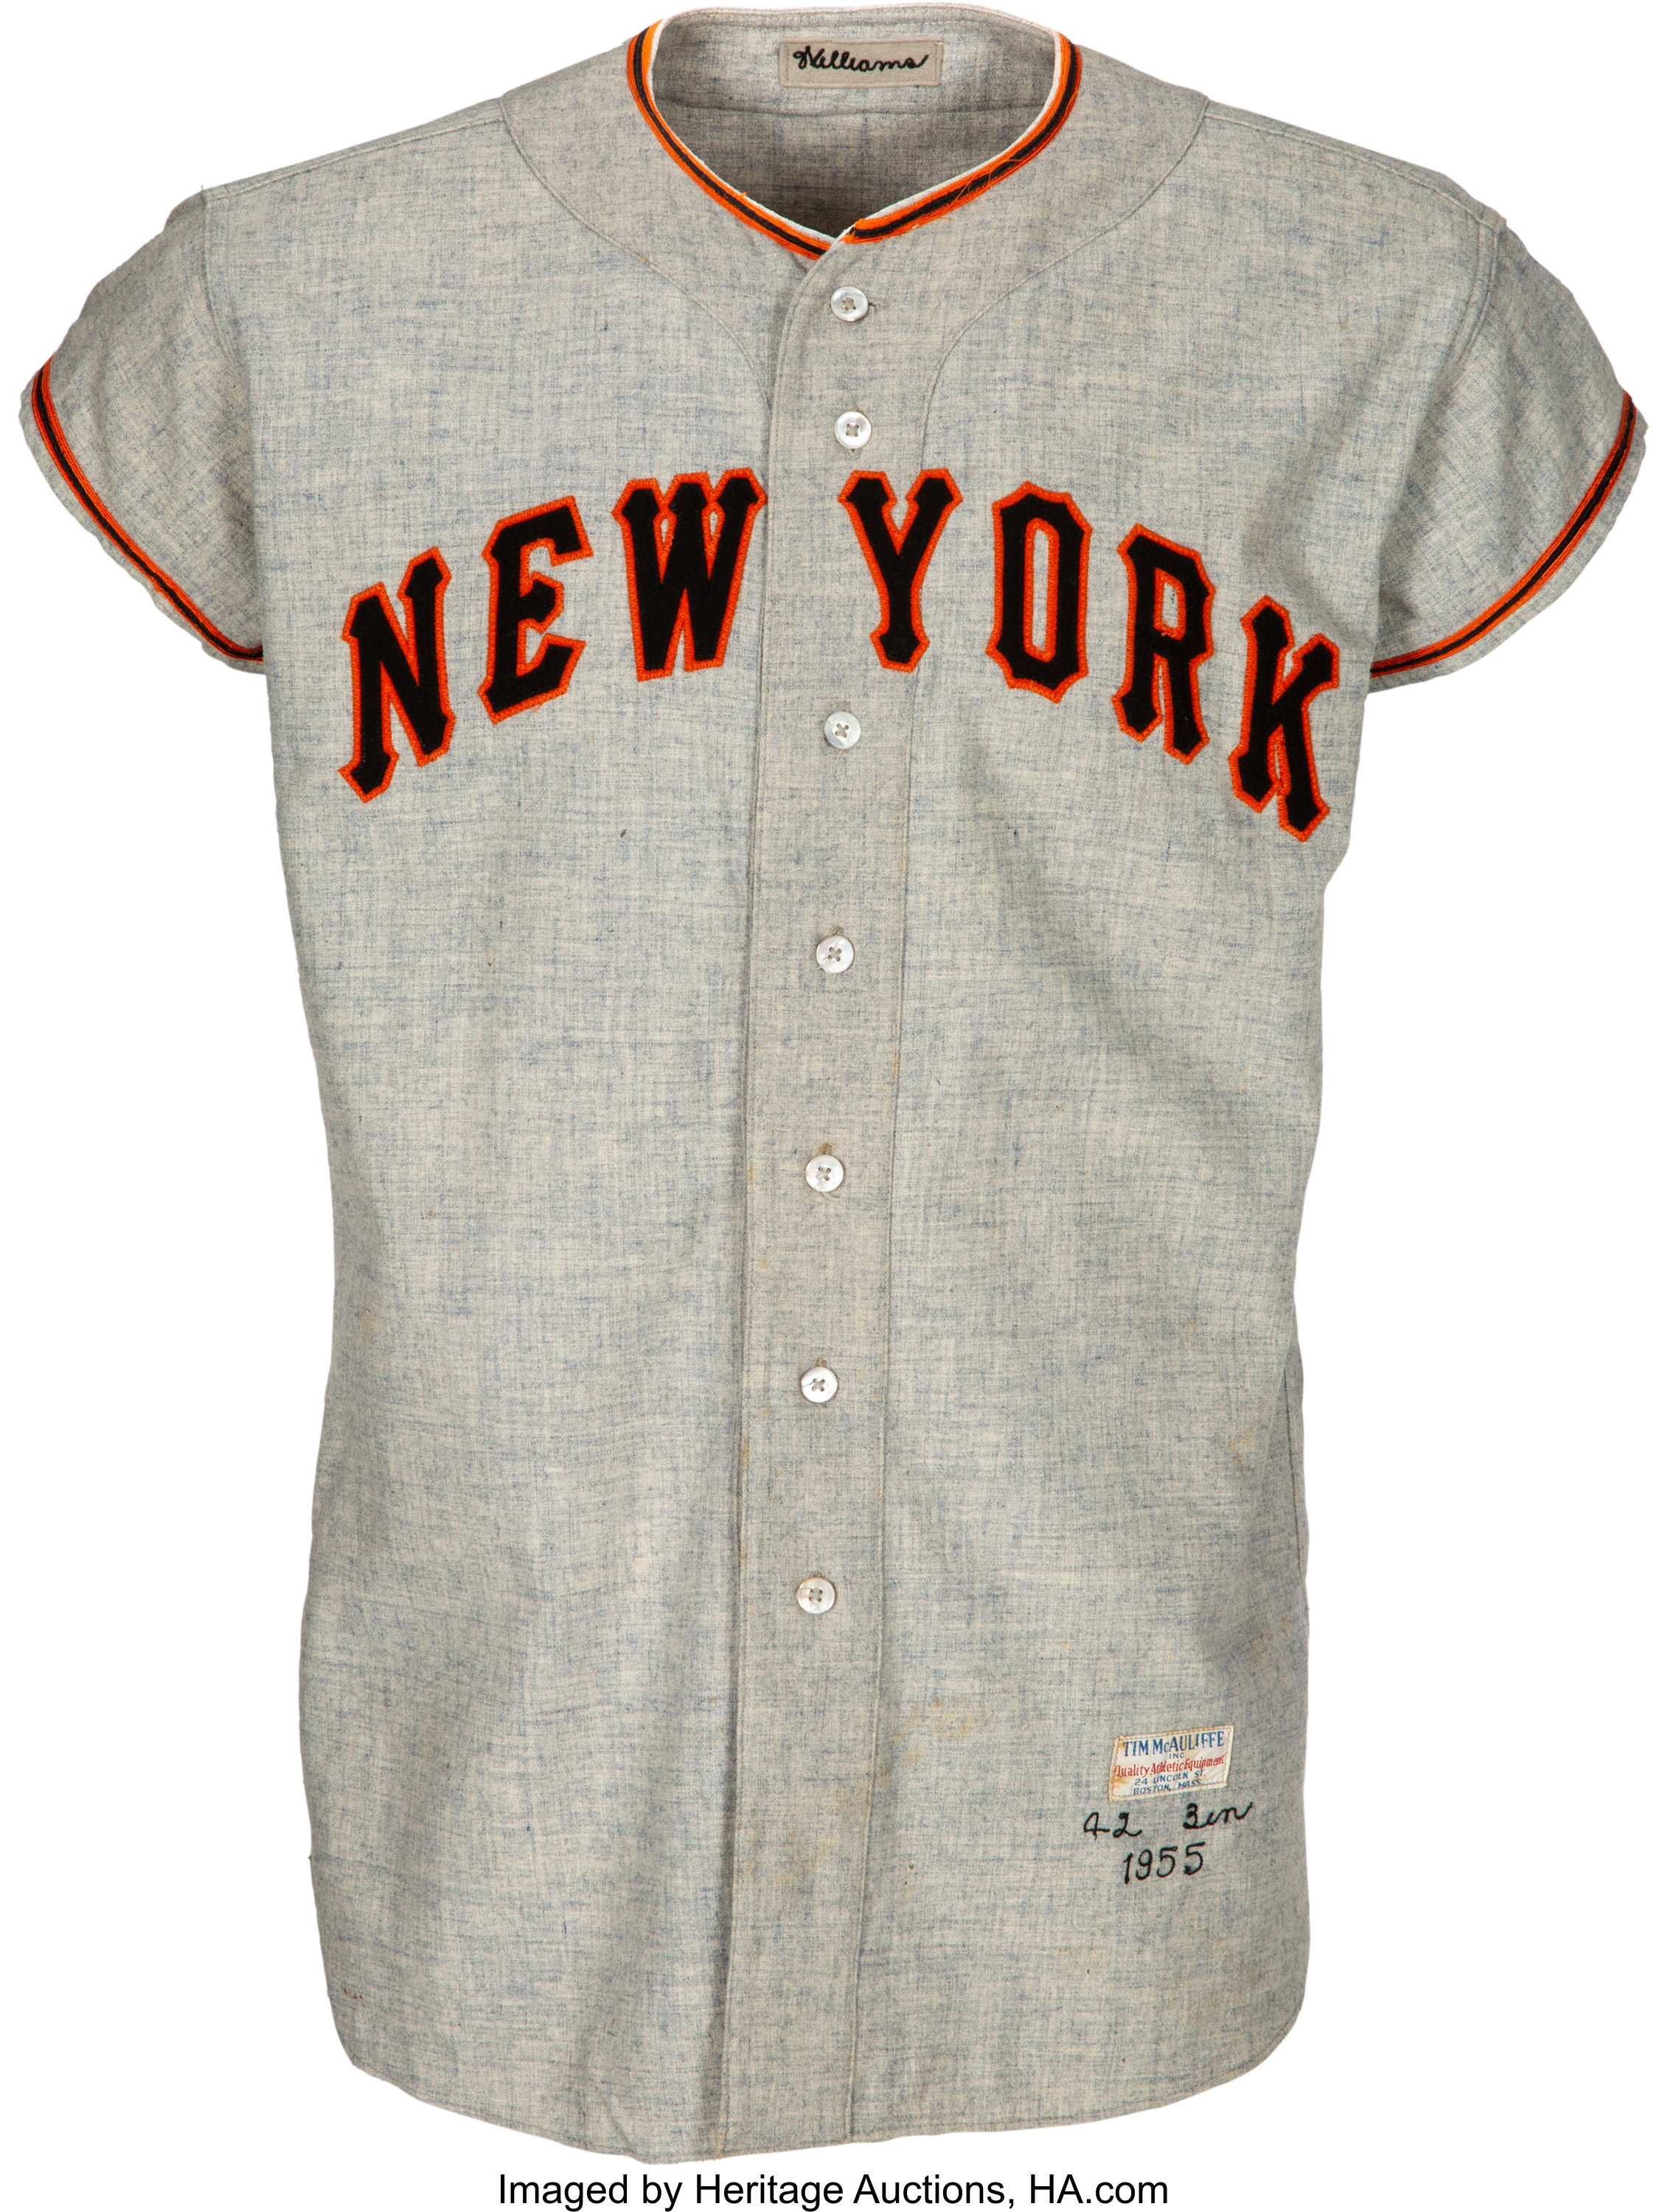 1954-55 Davey Williams Game Worn New York Giants Uniform